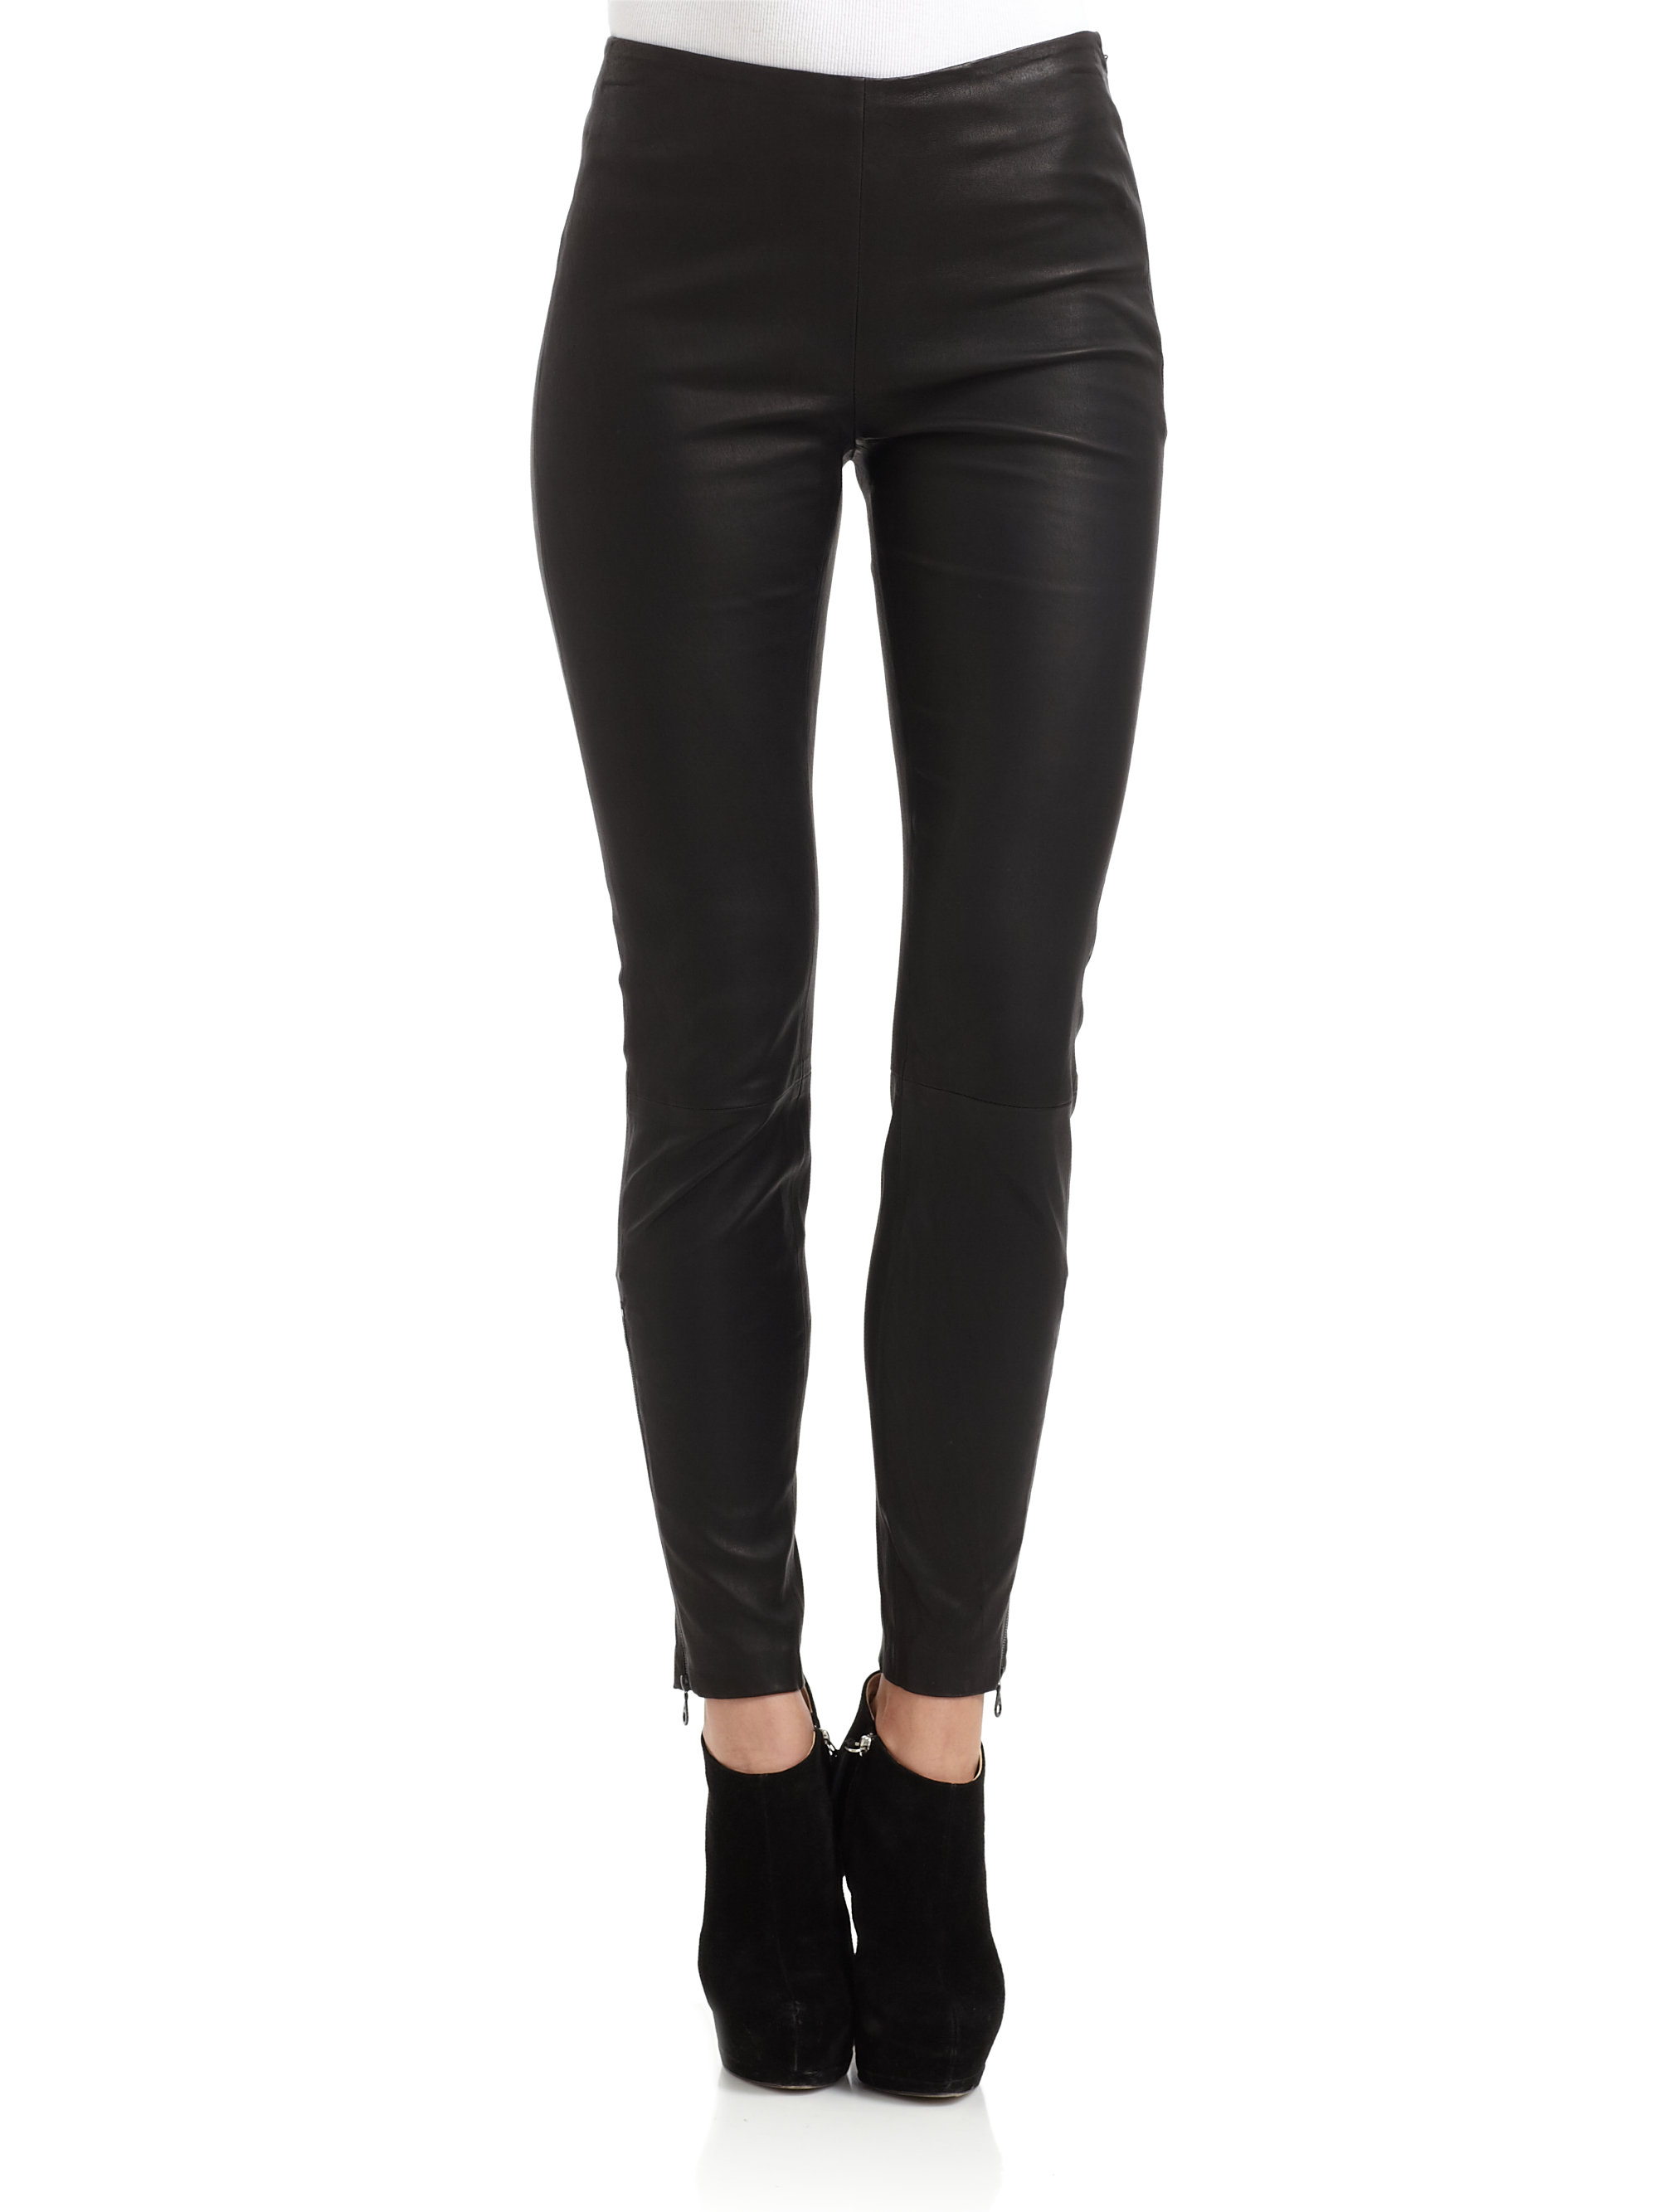 Lyst - Catherine Malandrino Leather Skinny Pants in Black